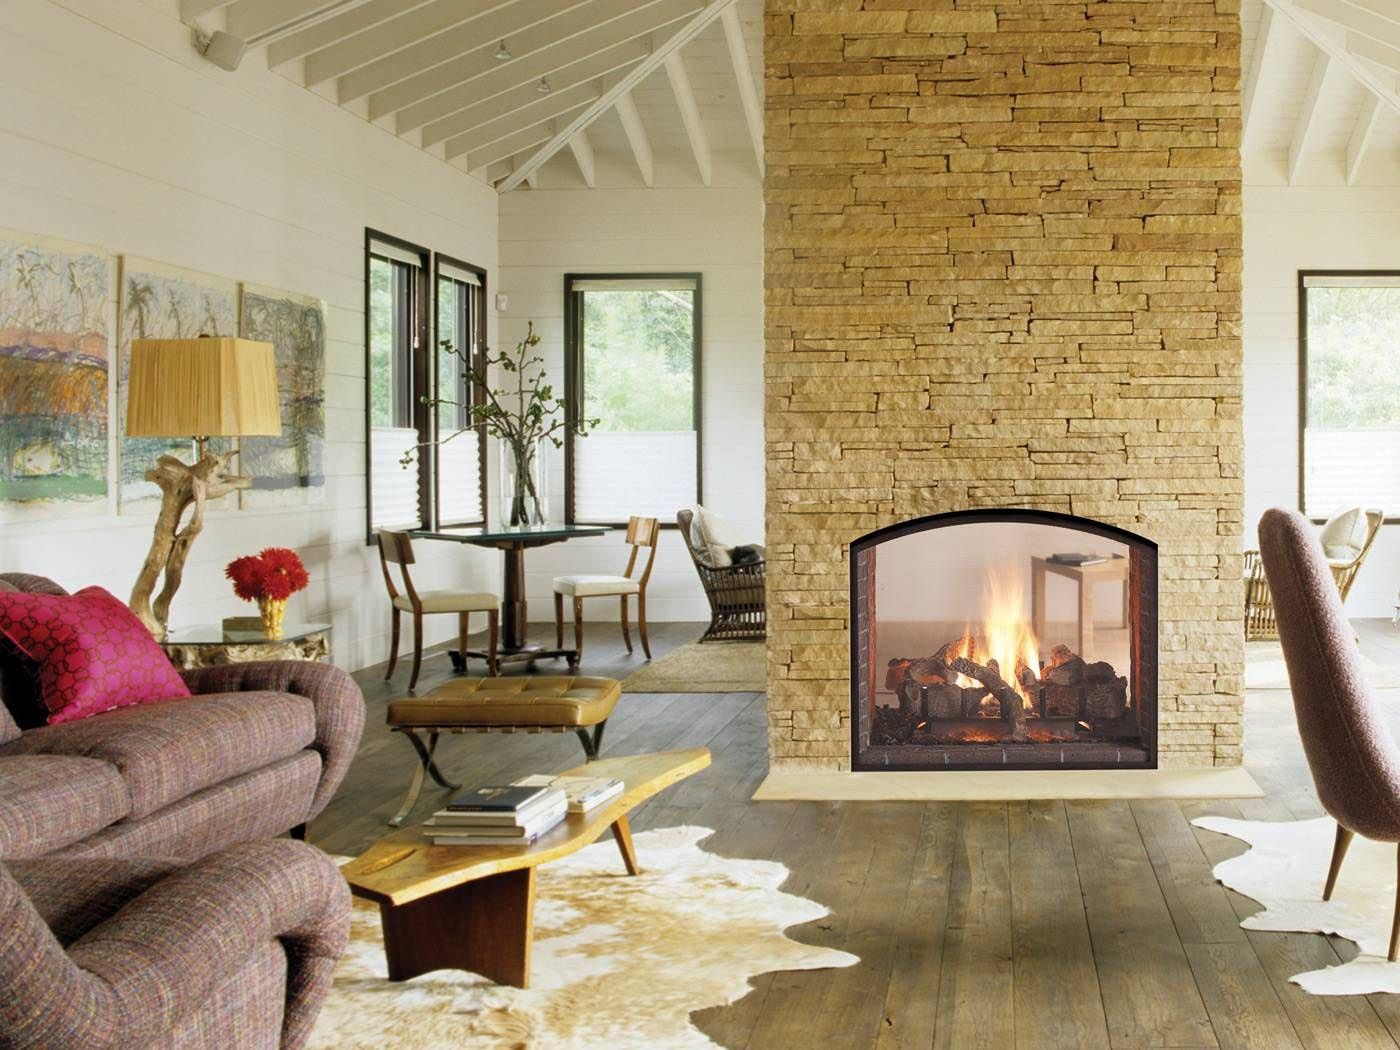 Burbank Fireplace Inspirational 2 Sided Wood Burning Fireplace Back Veranda and Yard